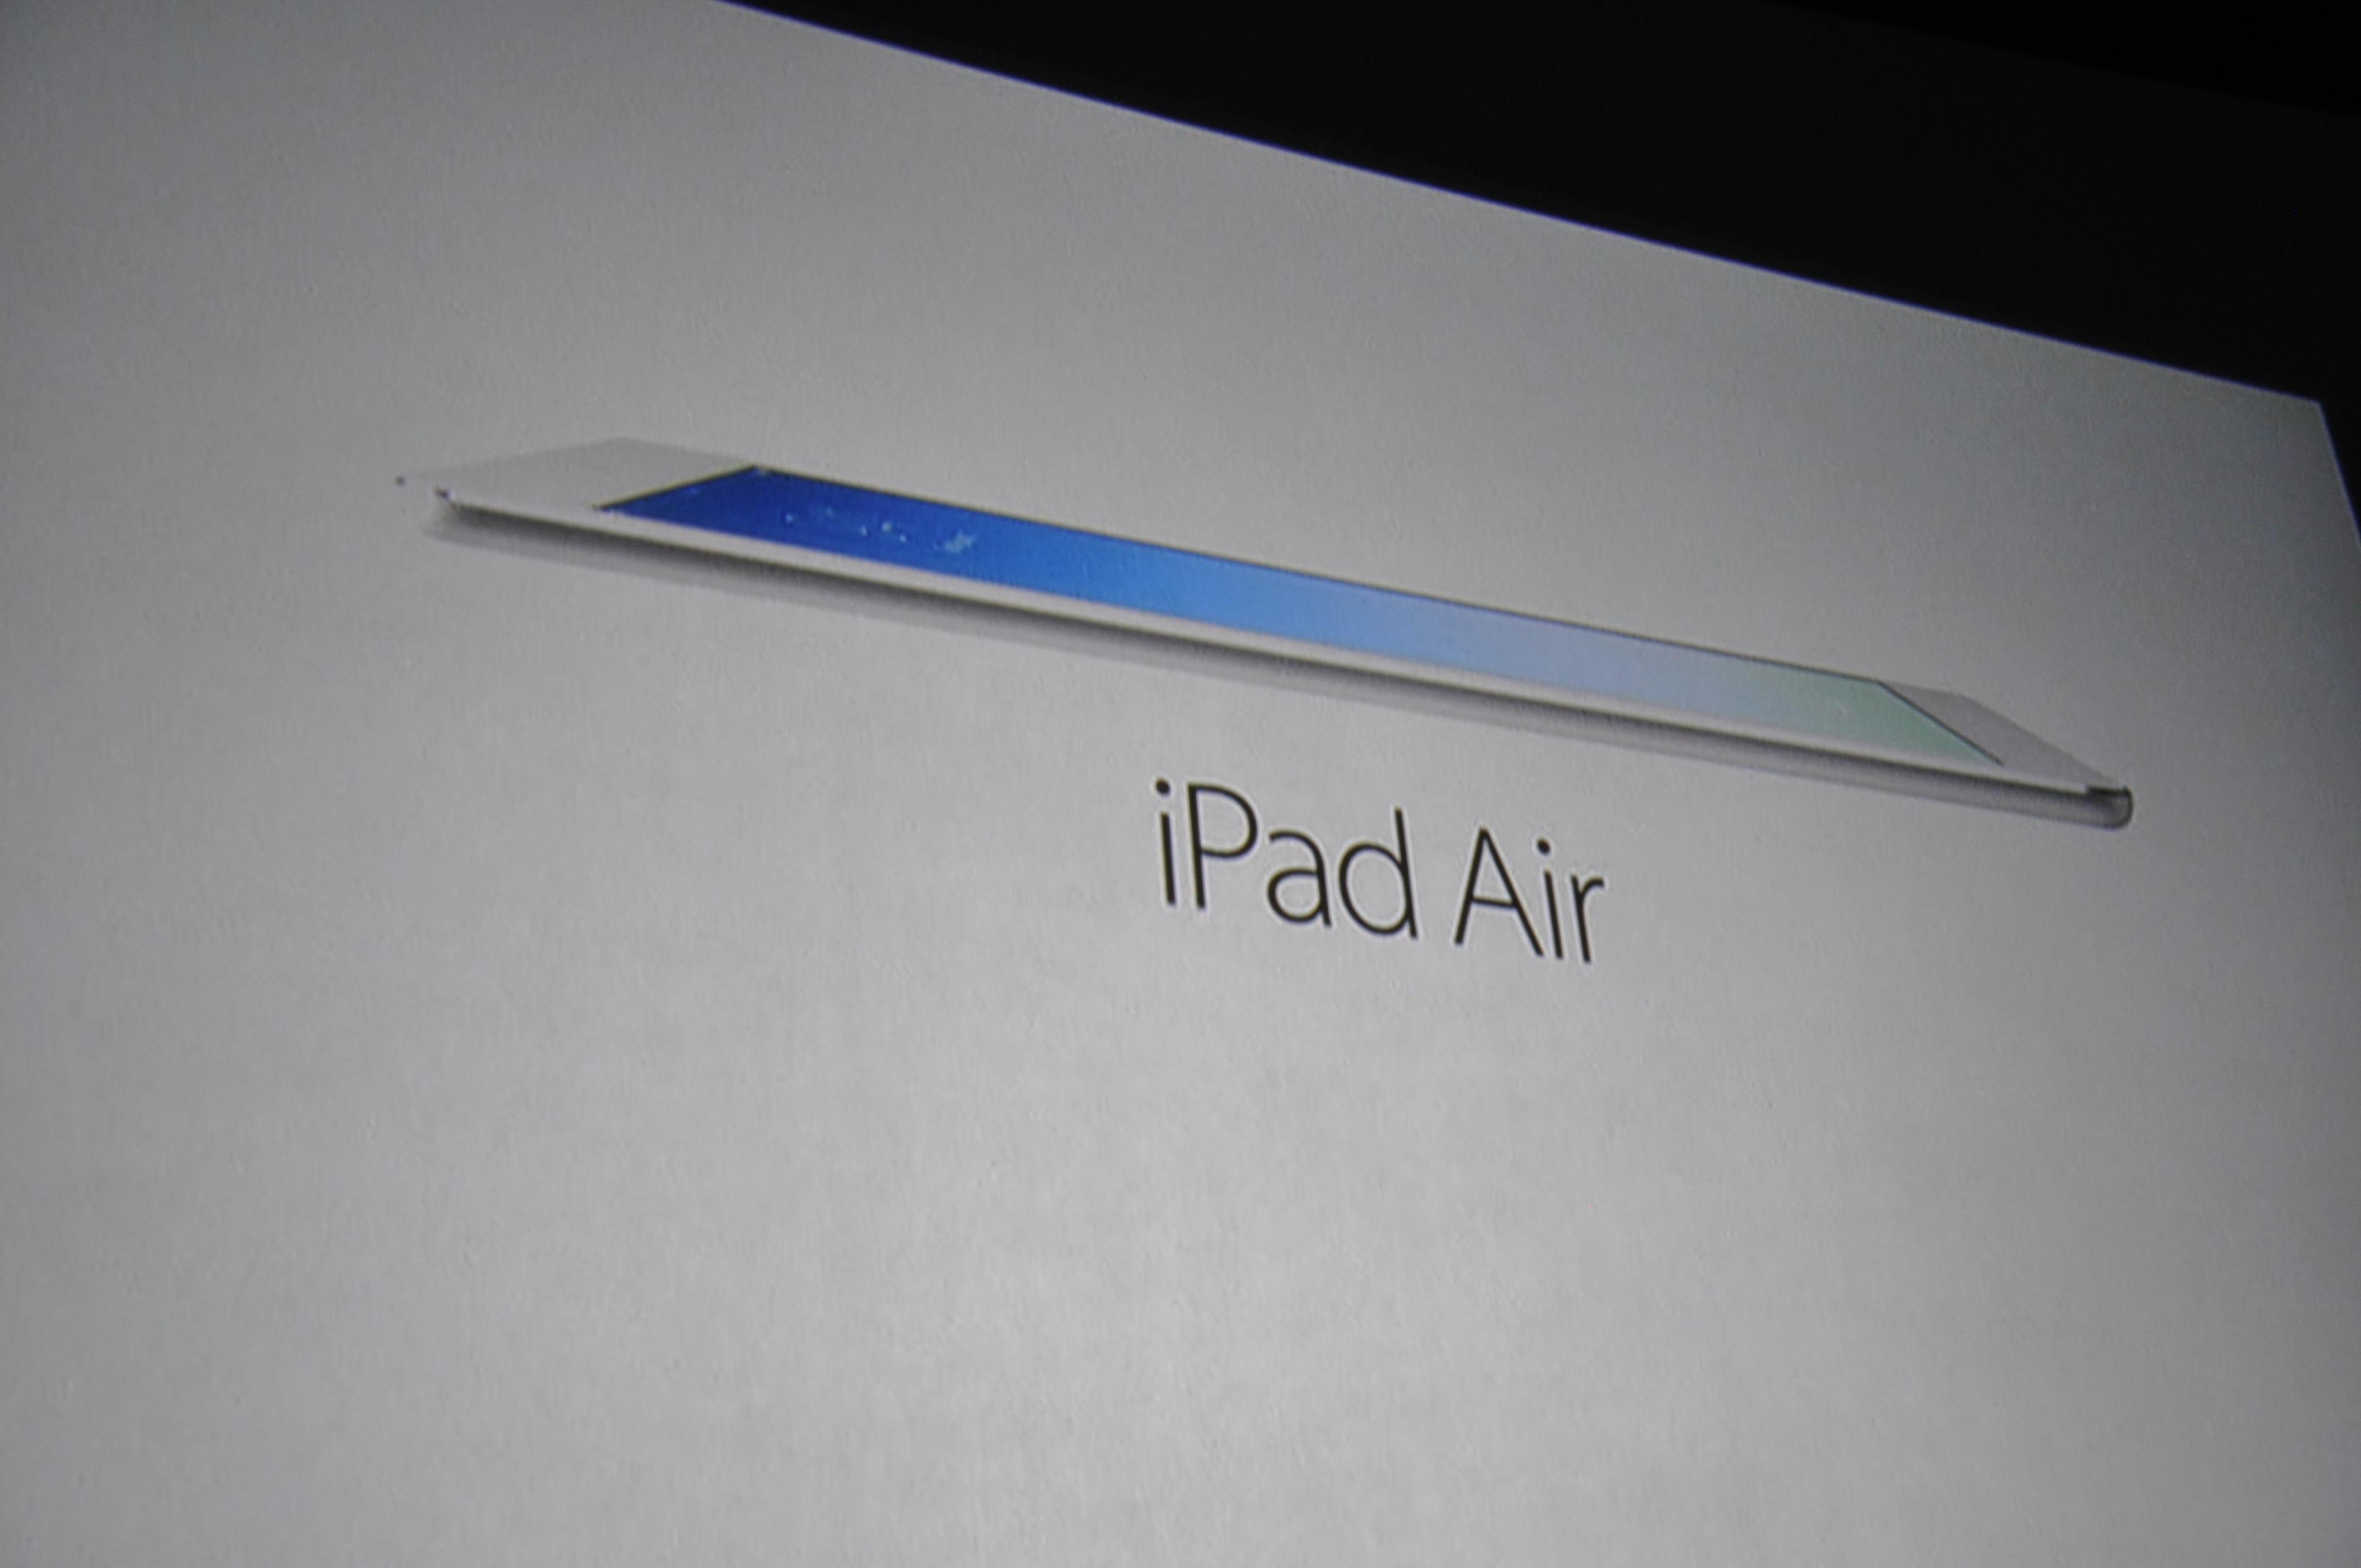 Navnet er endret - nye iPad heter iPad Air. Foto: Finn Jarle Kvalheim, Amobil.no